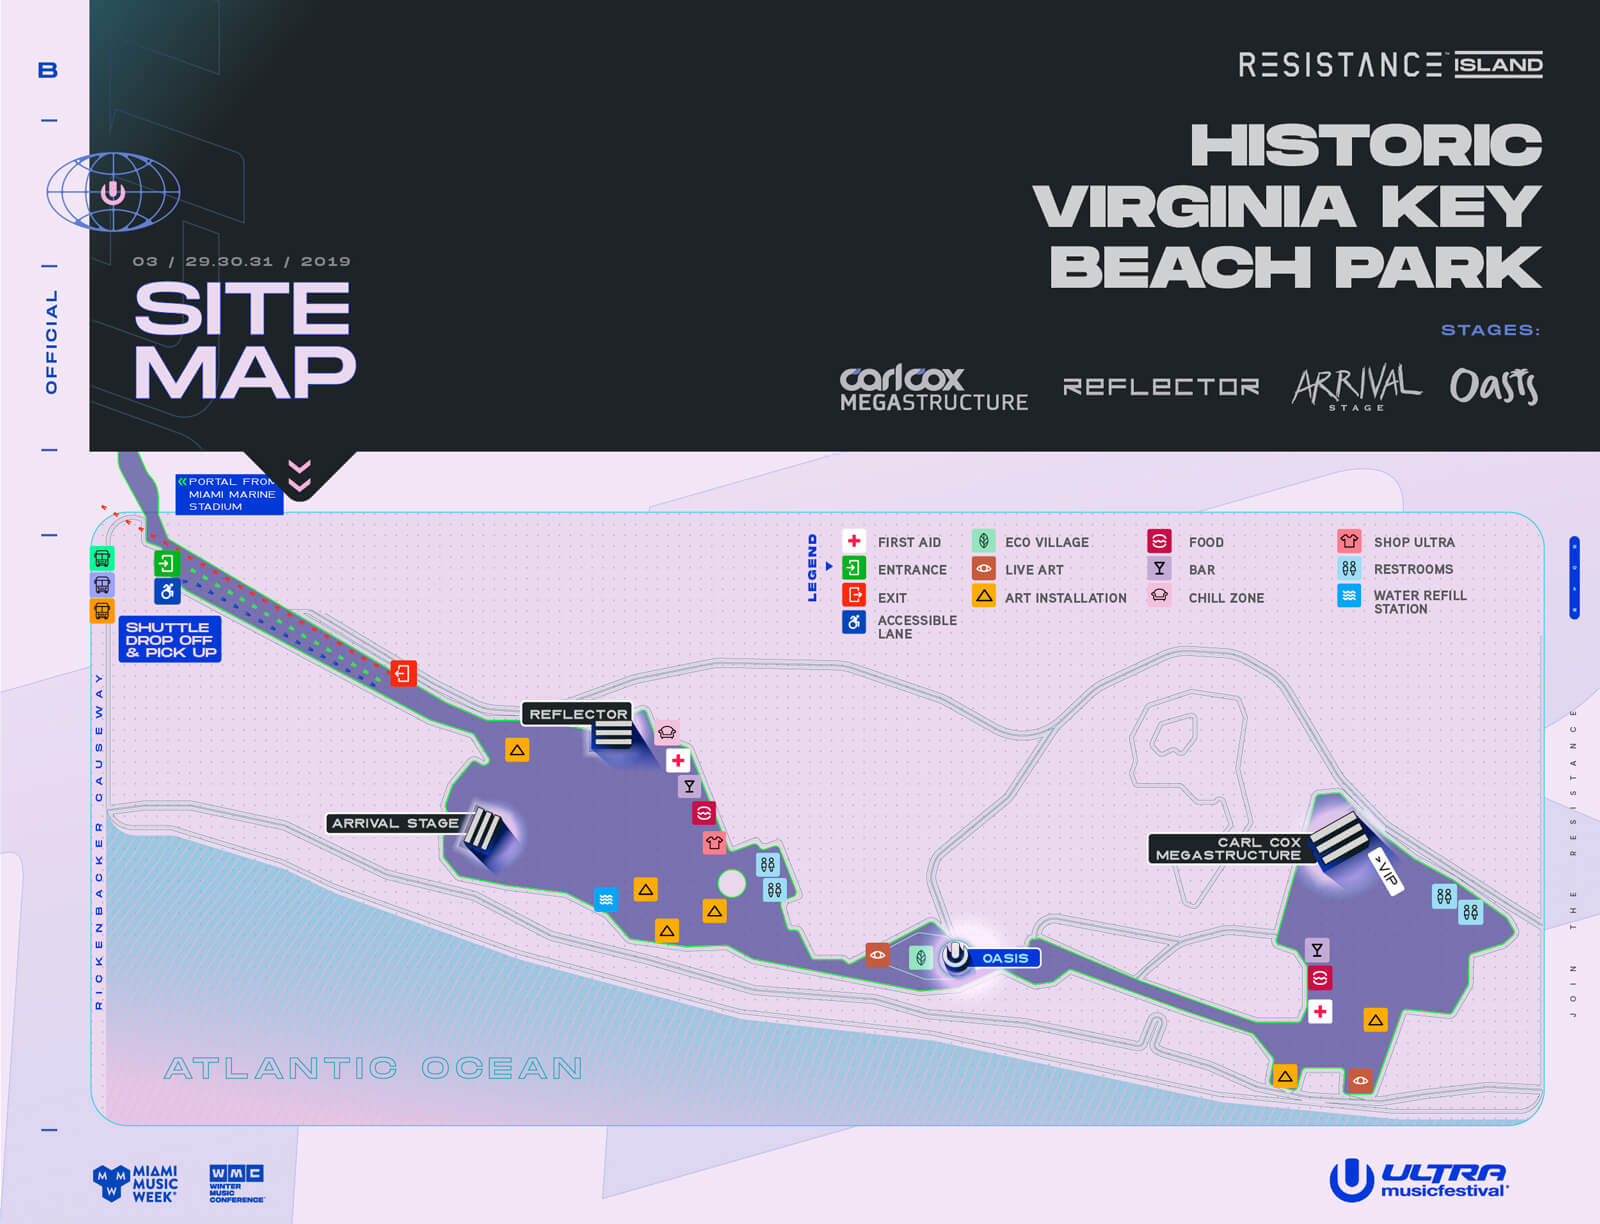 Ultra Music Festival 2019 RESISTANCE Island Map